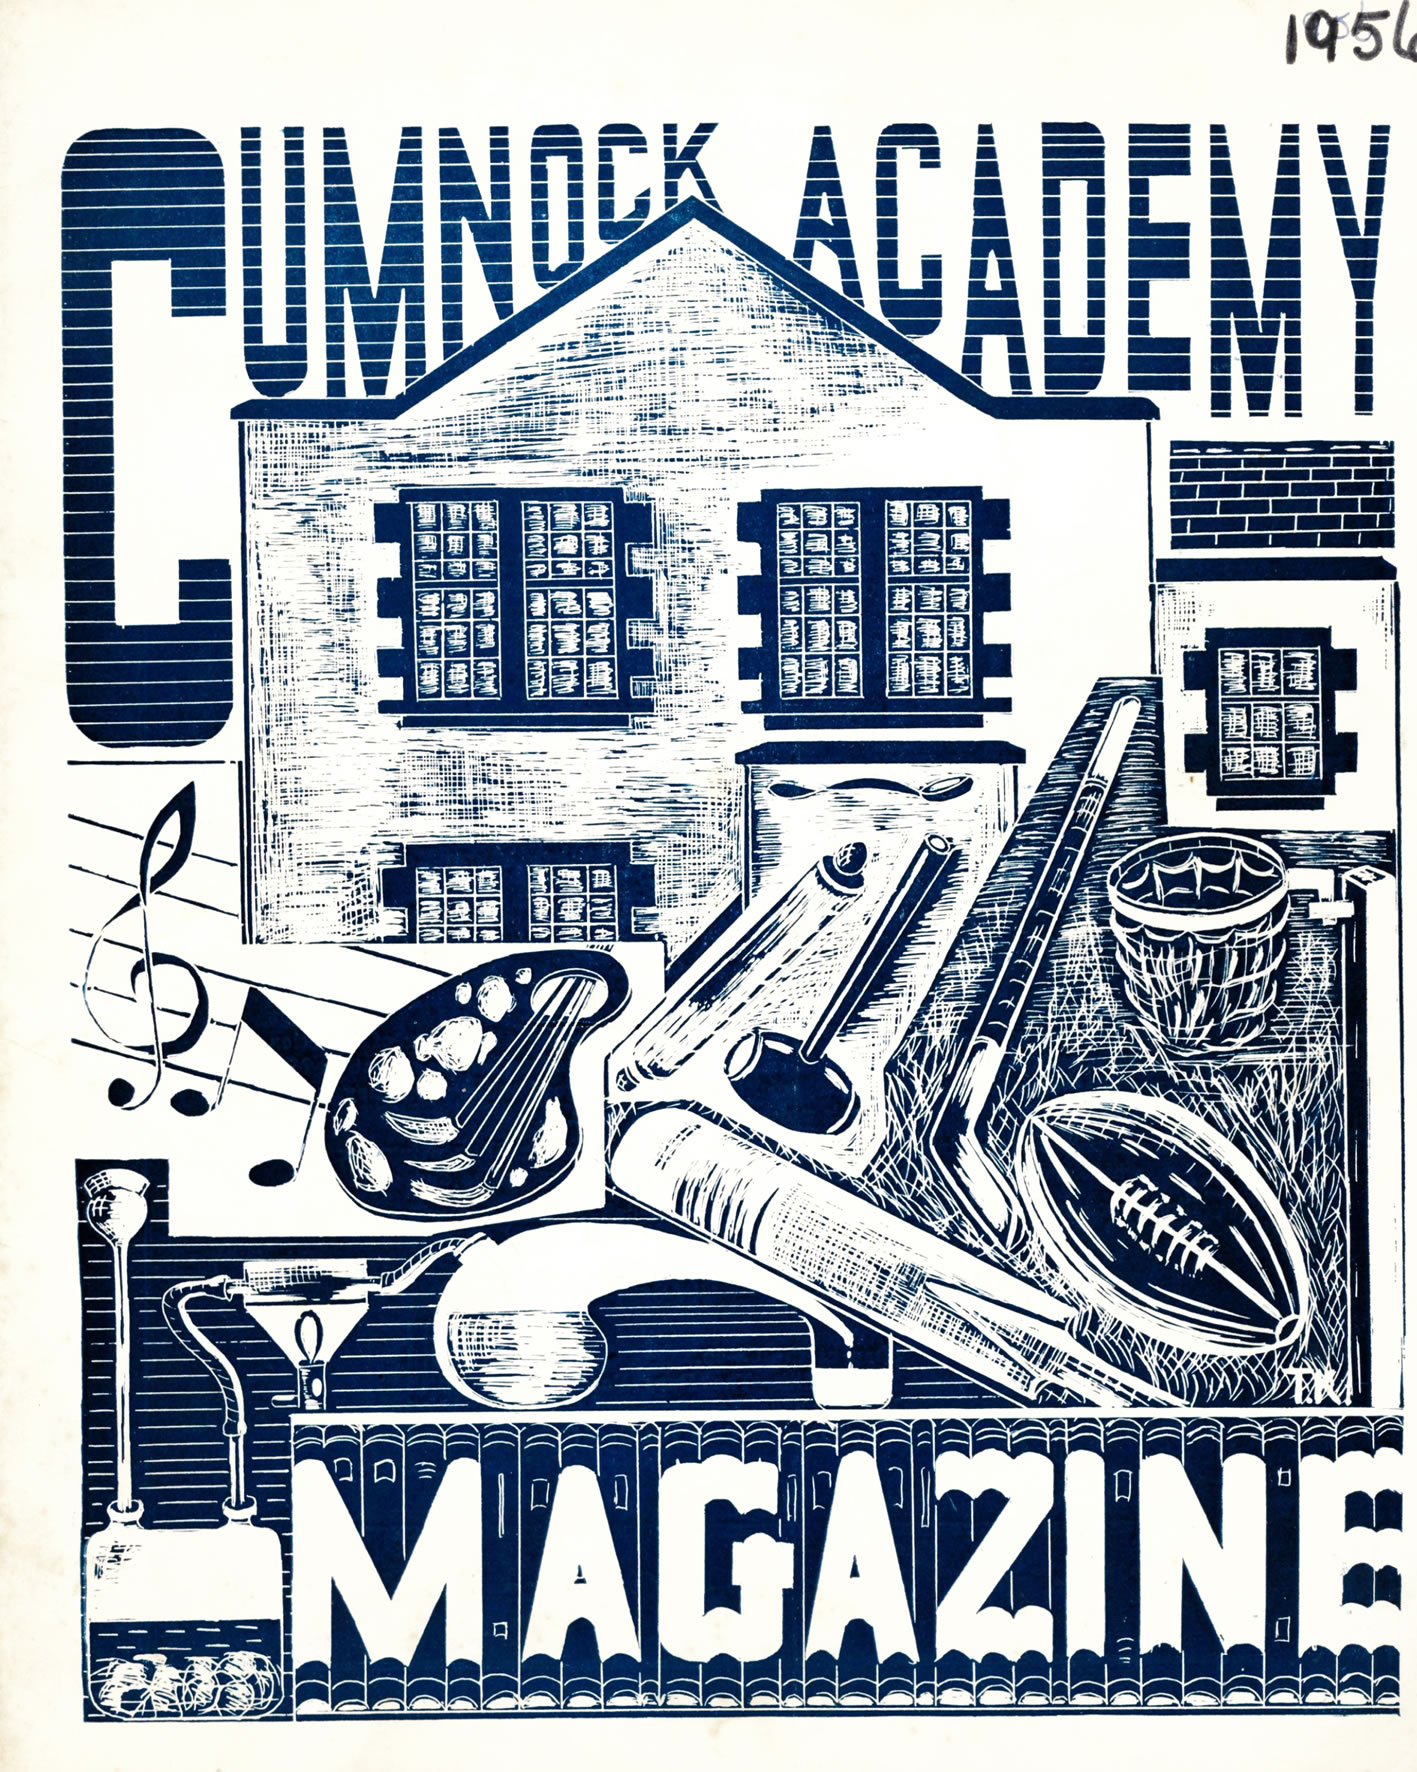 001Cumnock_Academy_Magazine_1956